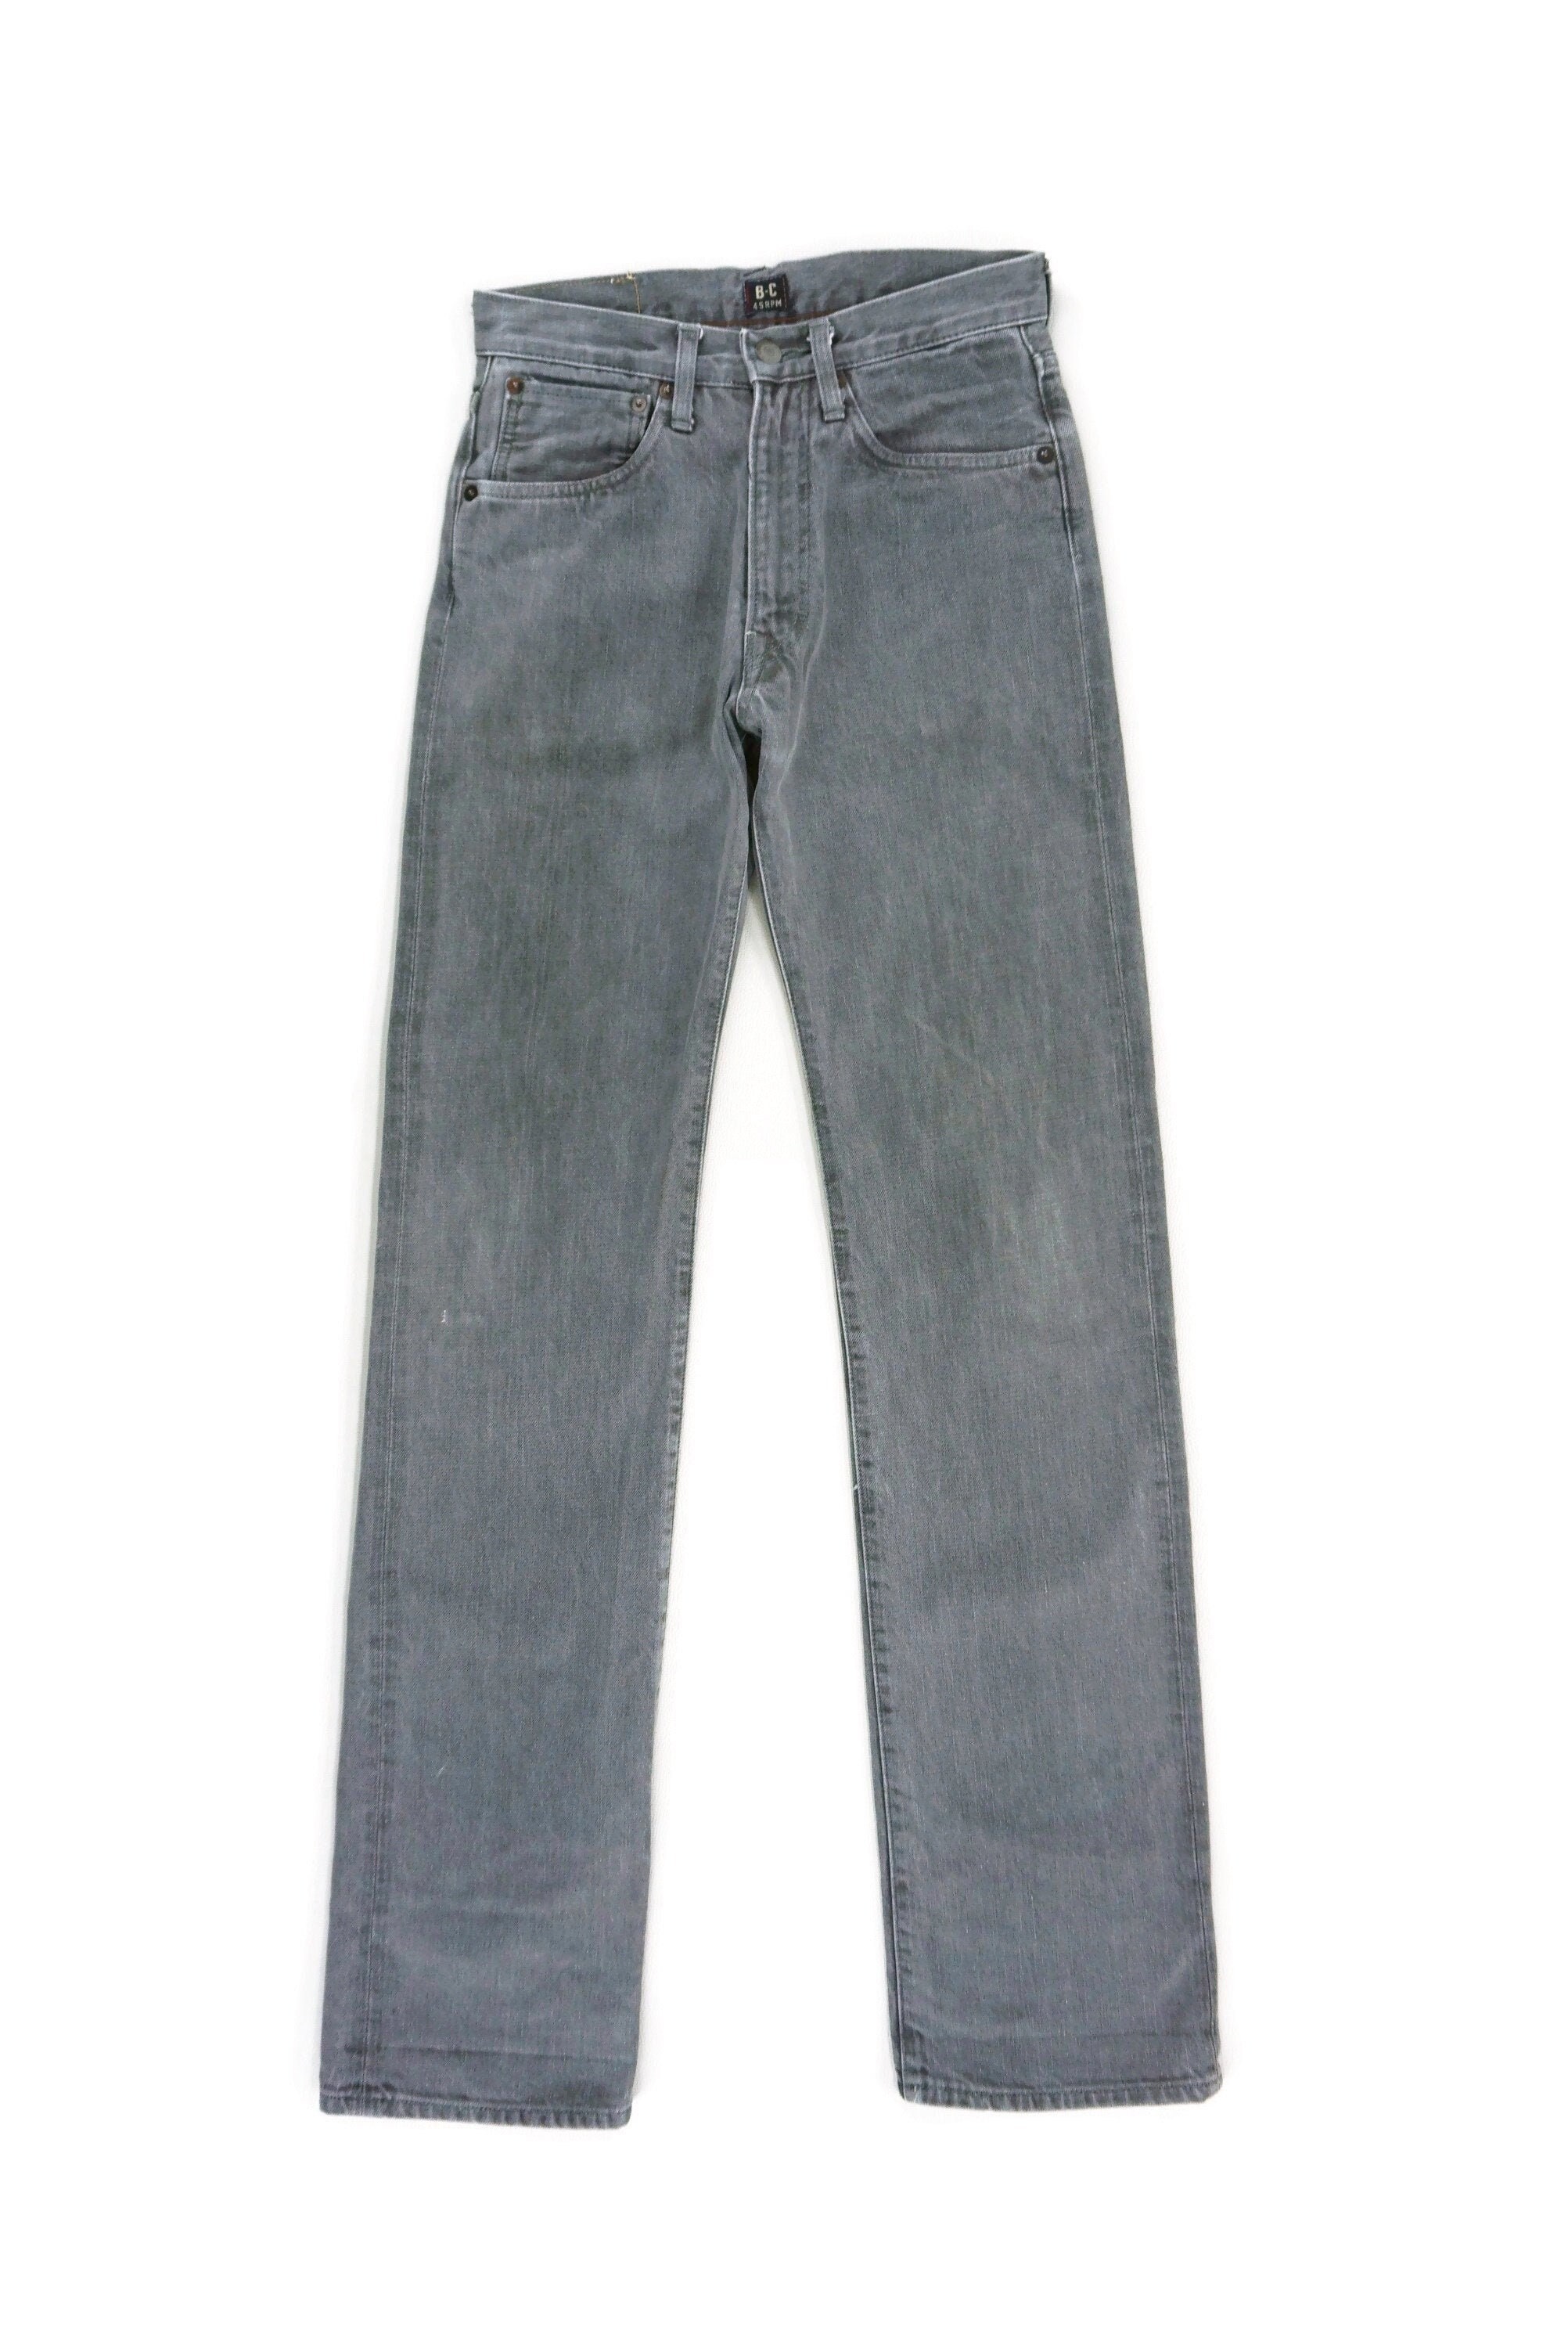 45rpm Jeans Size 28 W27xL34 B-C by 45 Rpm Studio Denim Jeans | Etsy